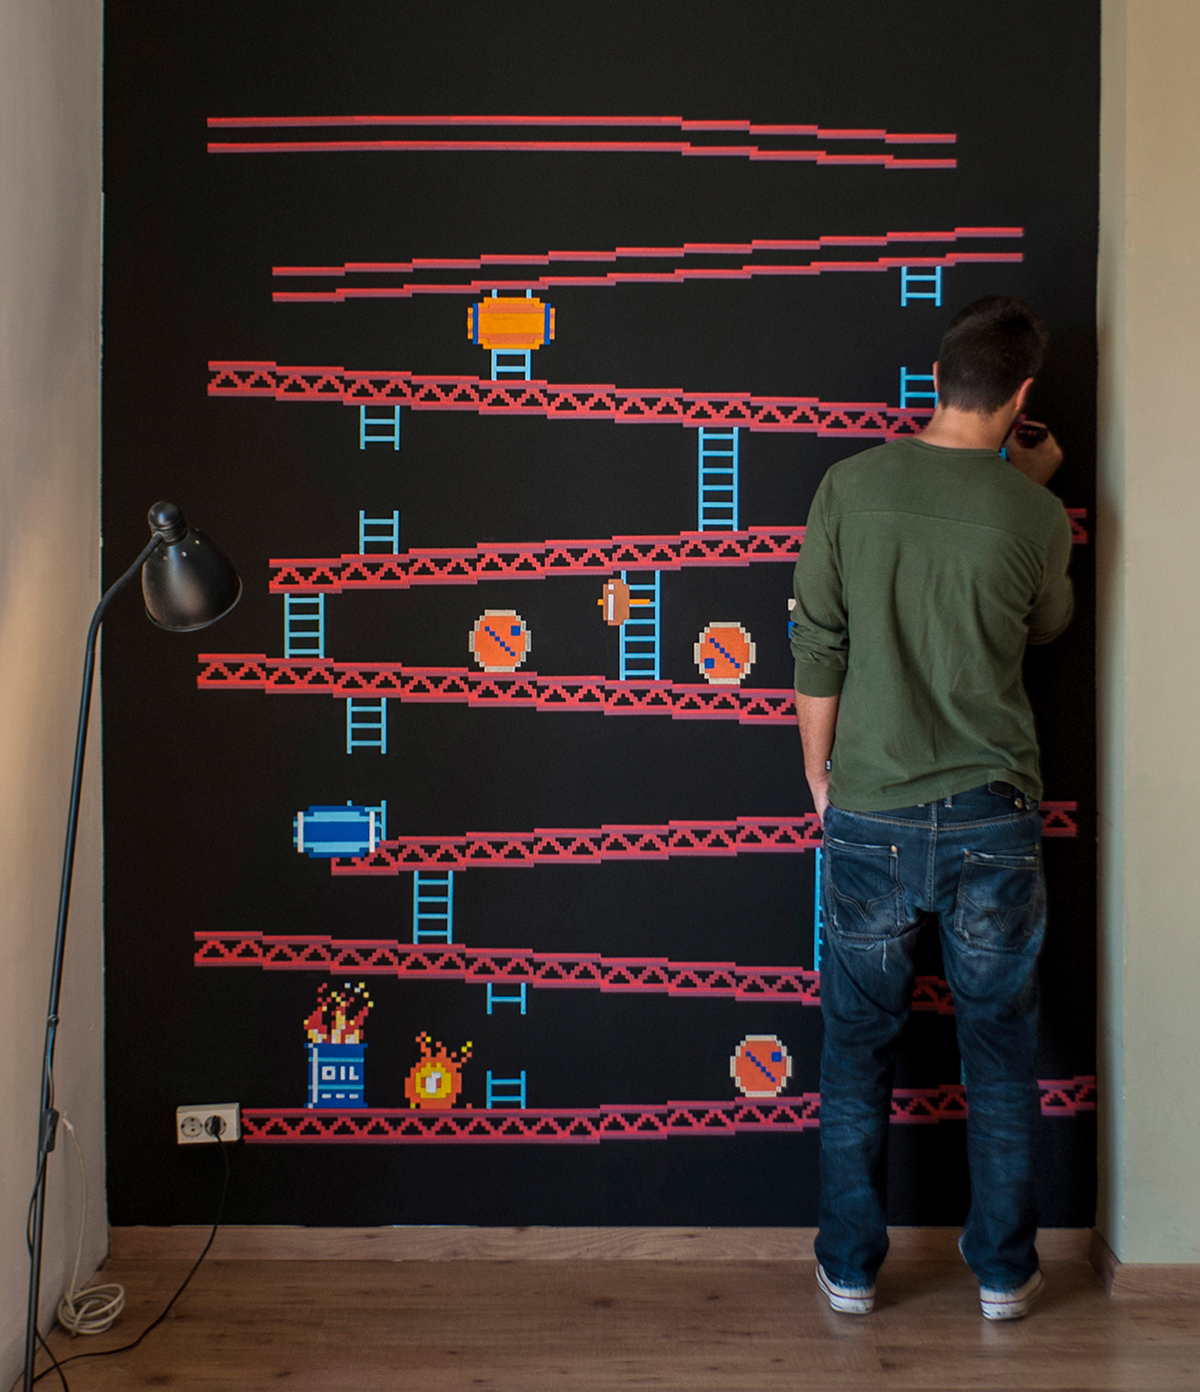 Super Mario Nintendo  arcade  1981  rotulador  Marker  posca  mural  wall  dibujo   draw  painting  pixel  pixelart